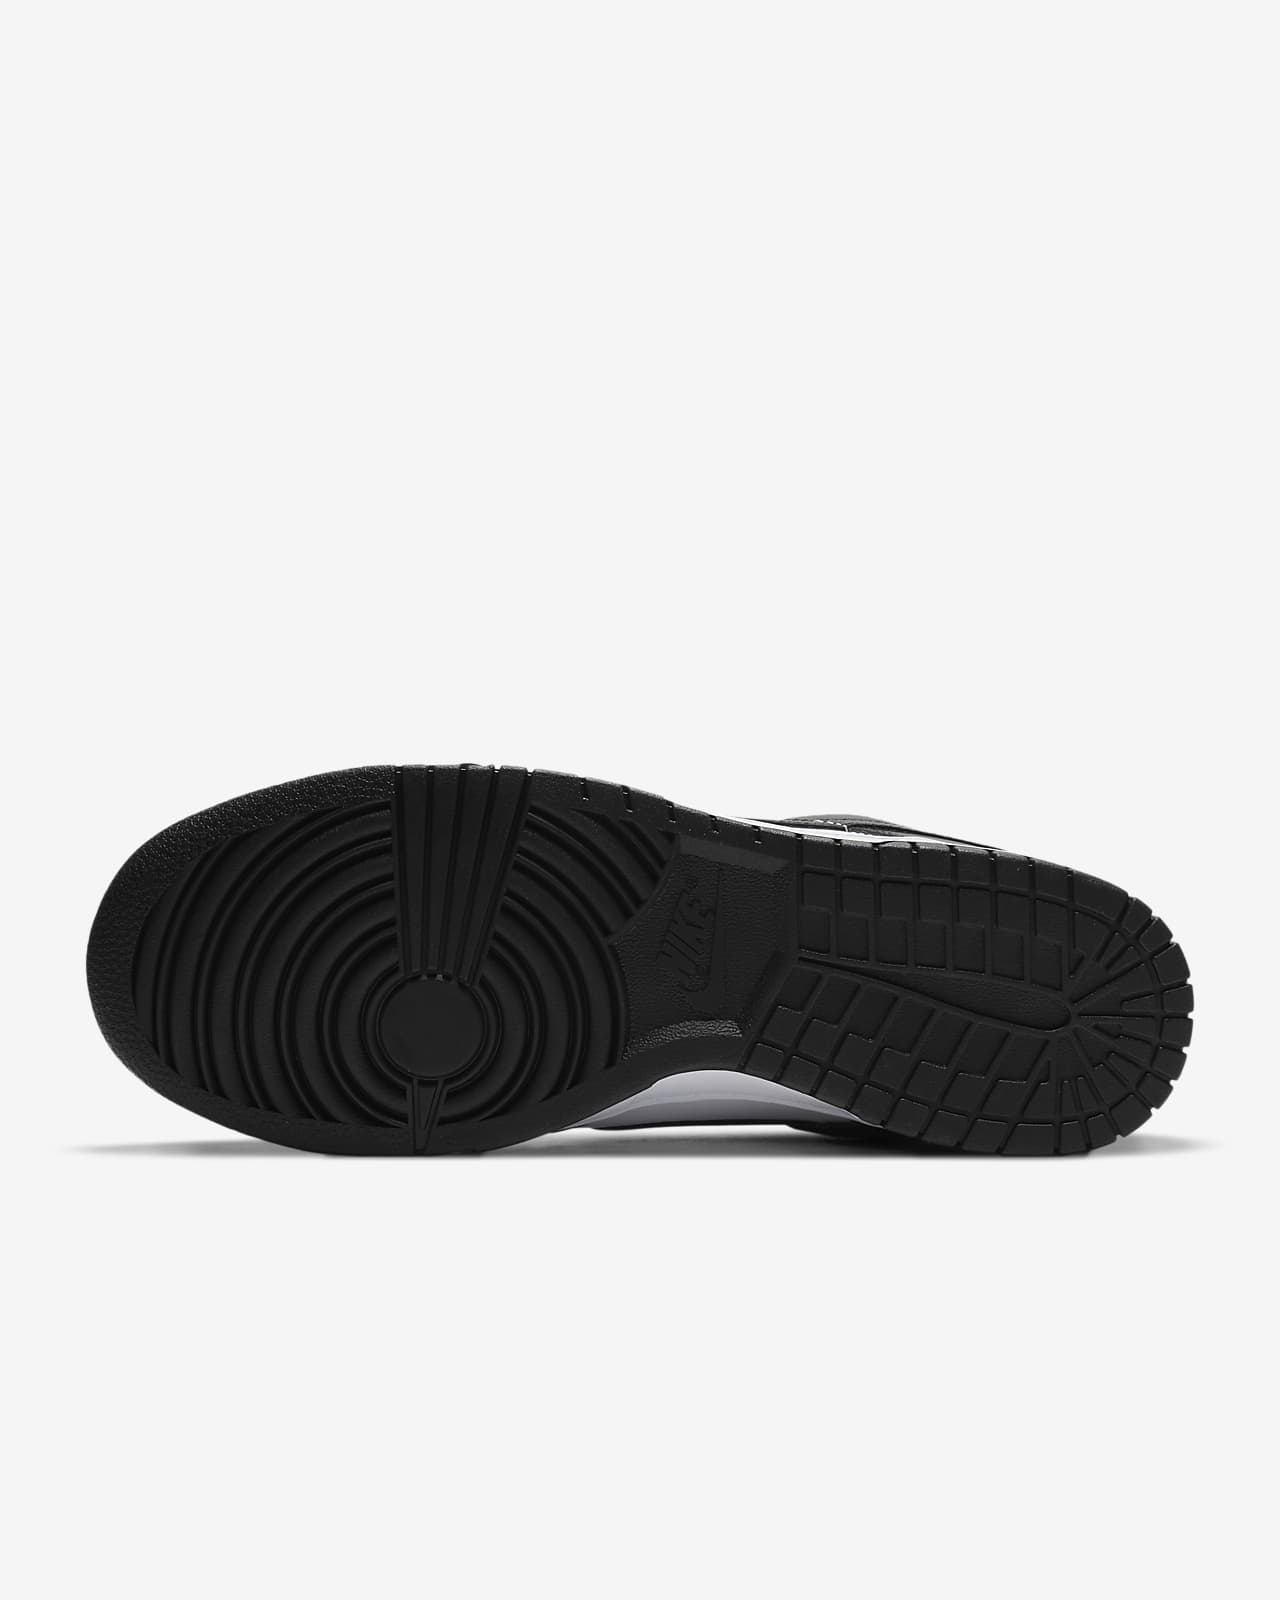 Nike Dunk Low Retro "White/Black"29cmNIKE